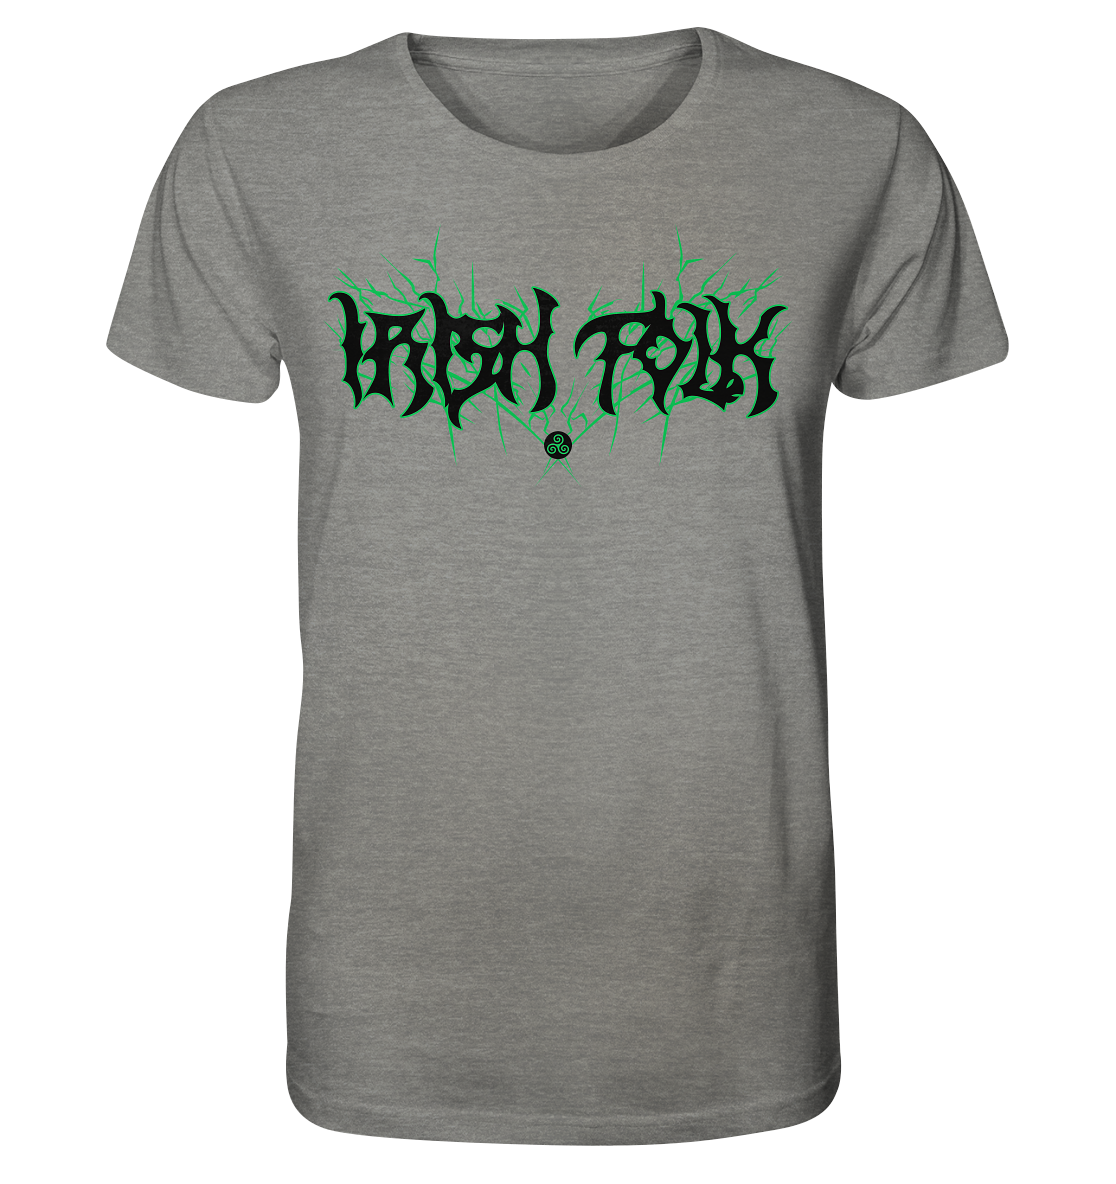 Irish Folk "Metal Band" - Organic Shirt (meliert)